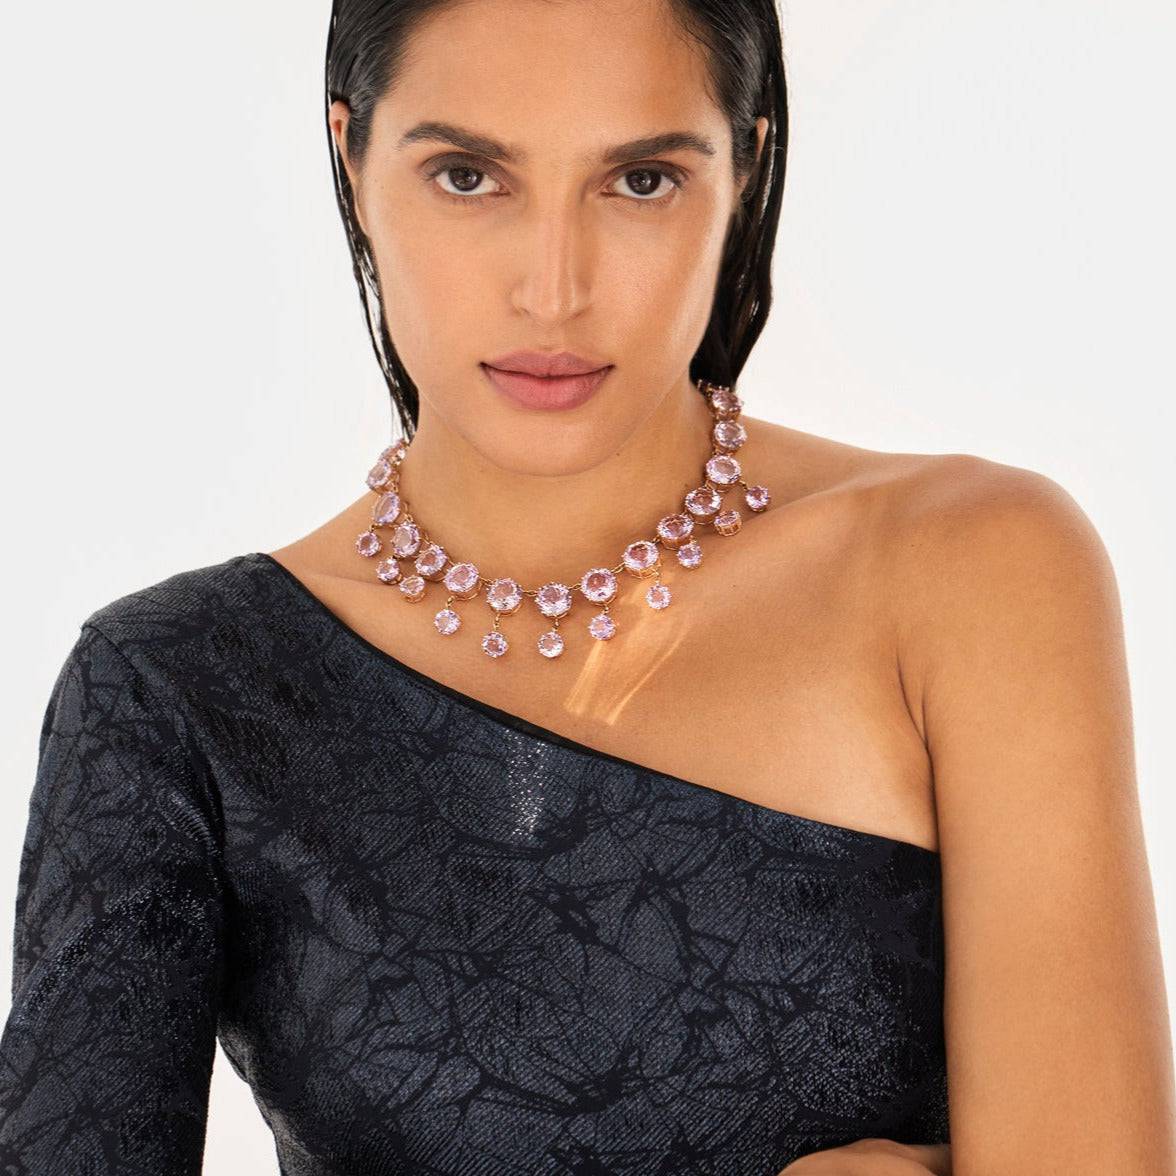 Royal Necklace Pink Amethyst - Crown - Ileana Makri store